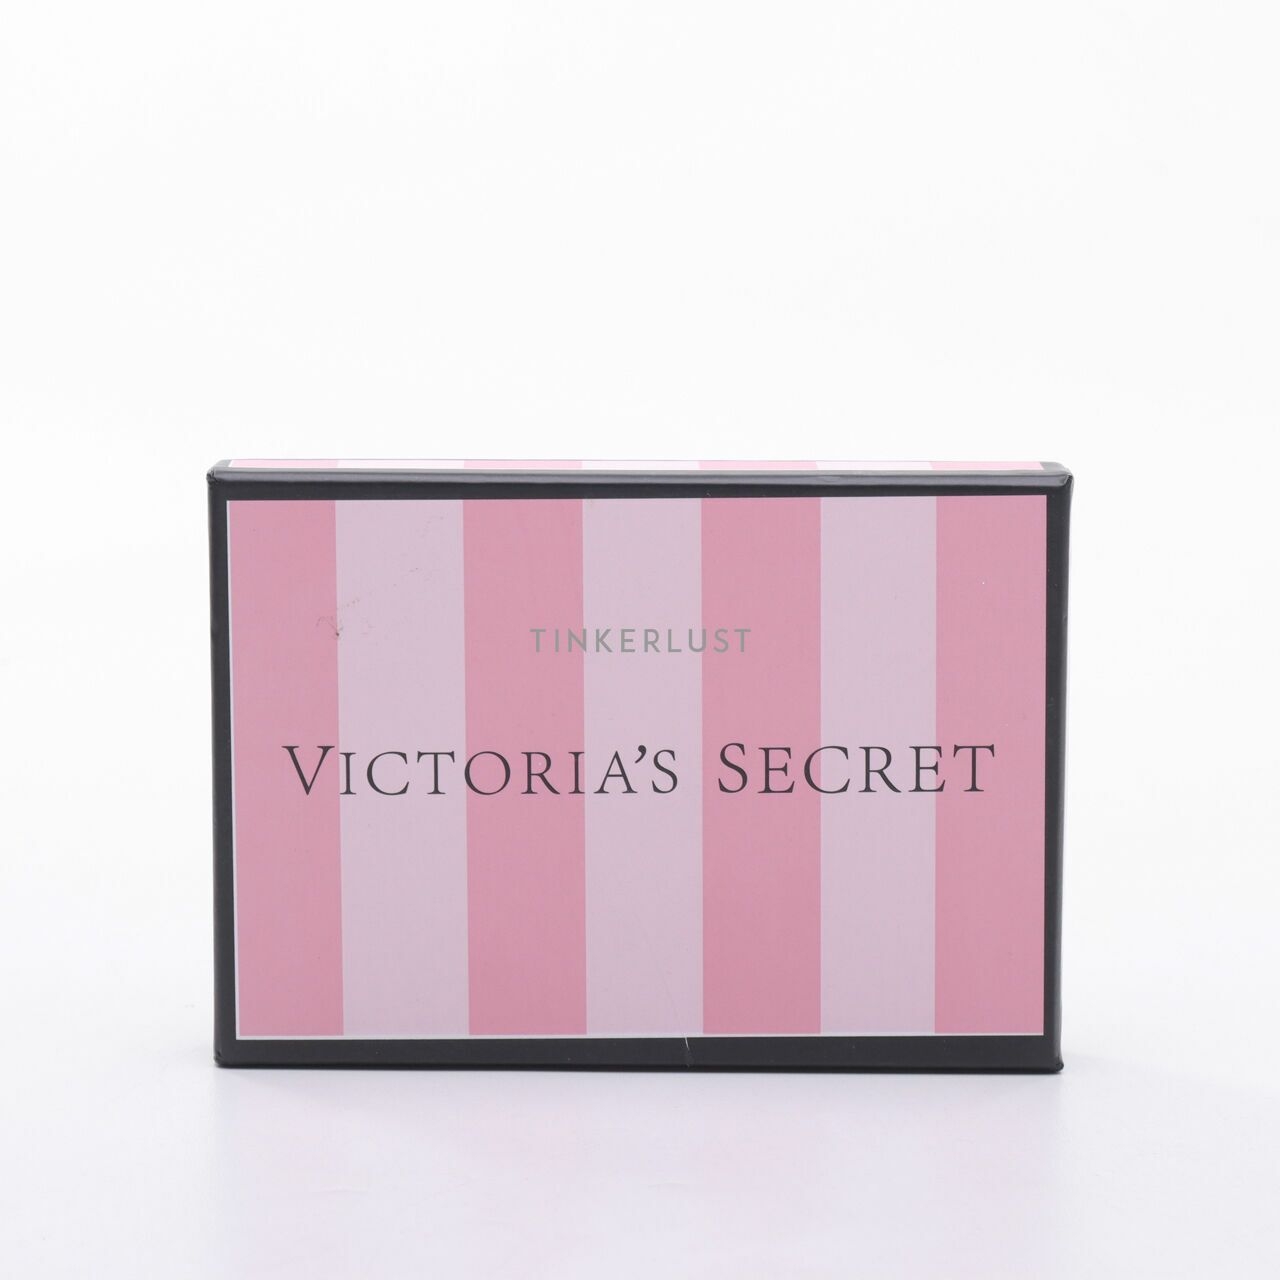 Victoria Secret Black Wallet 